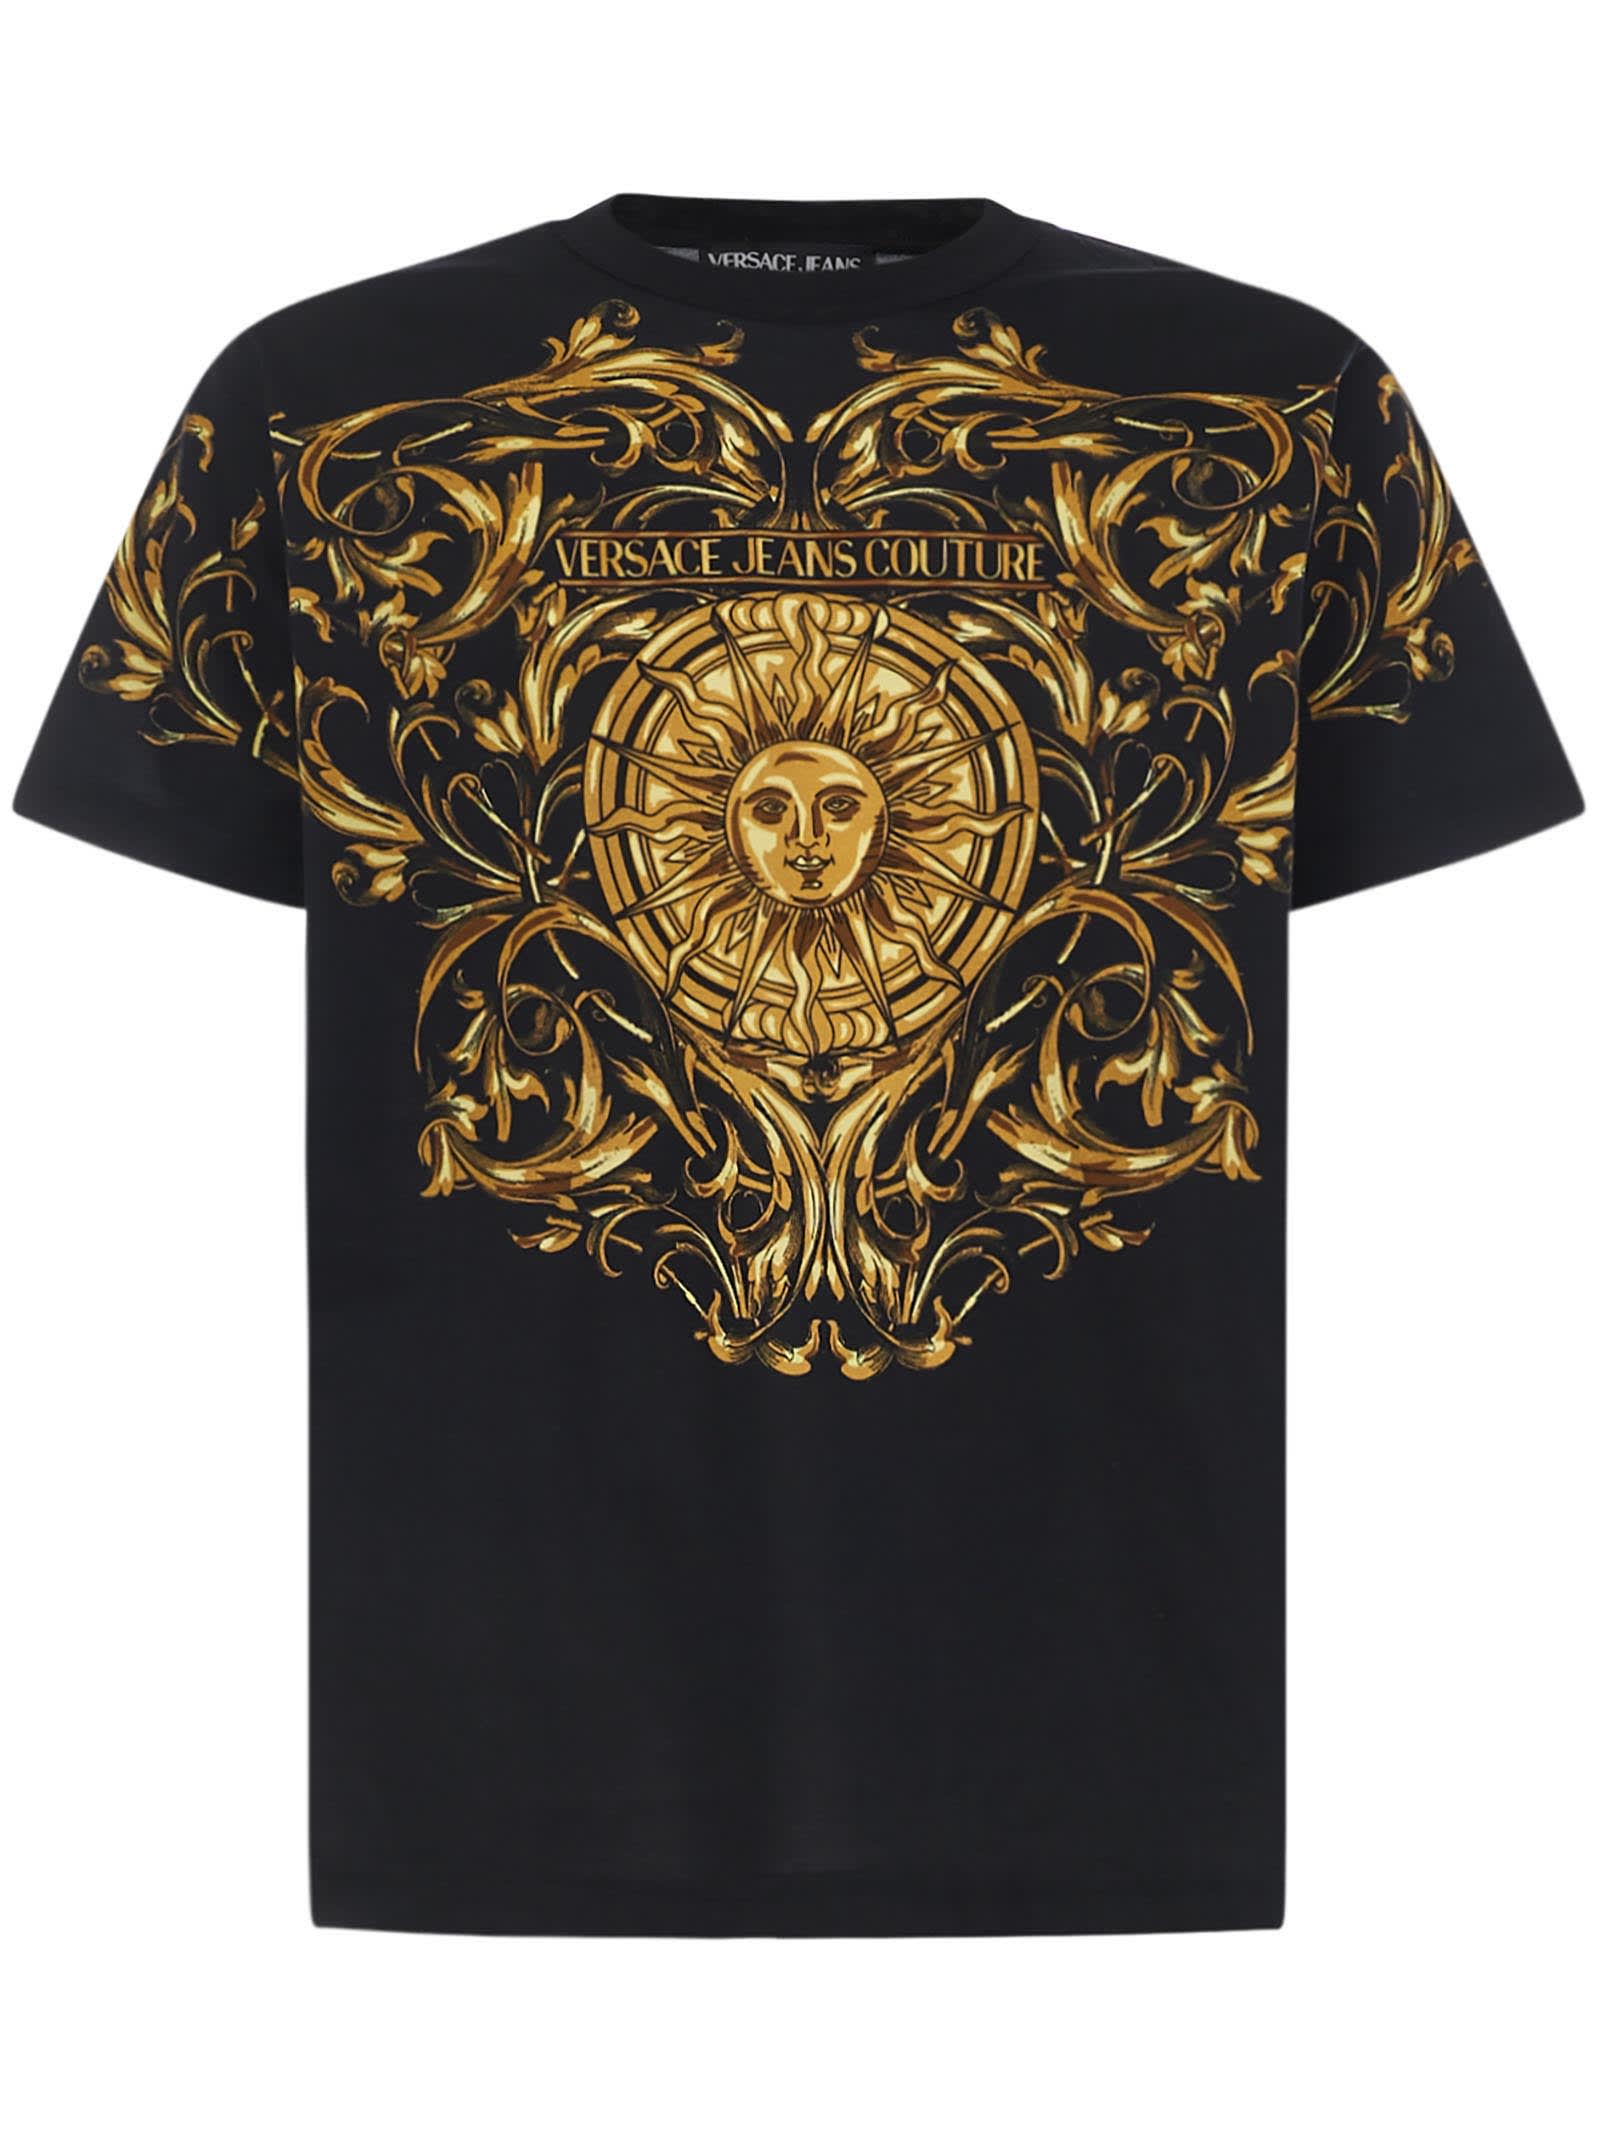 Versace Jeans Couture Baroque Sun T-shirt